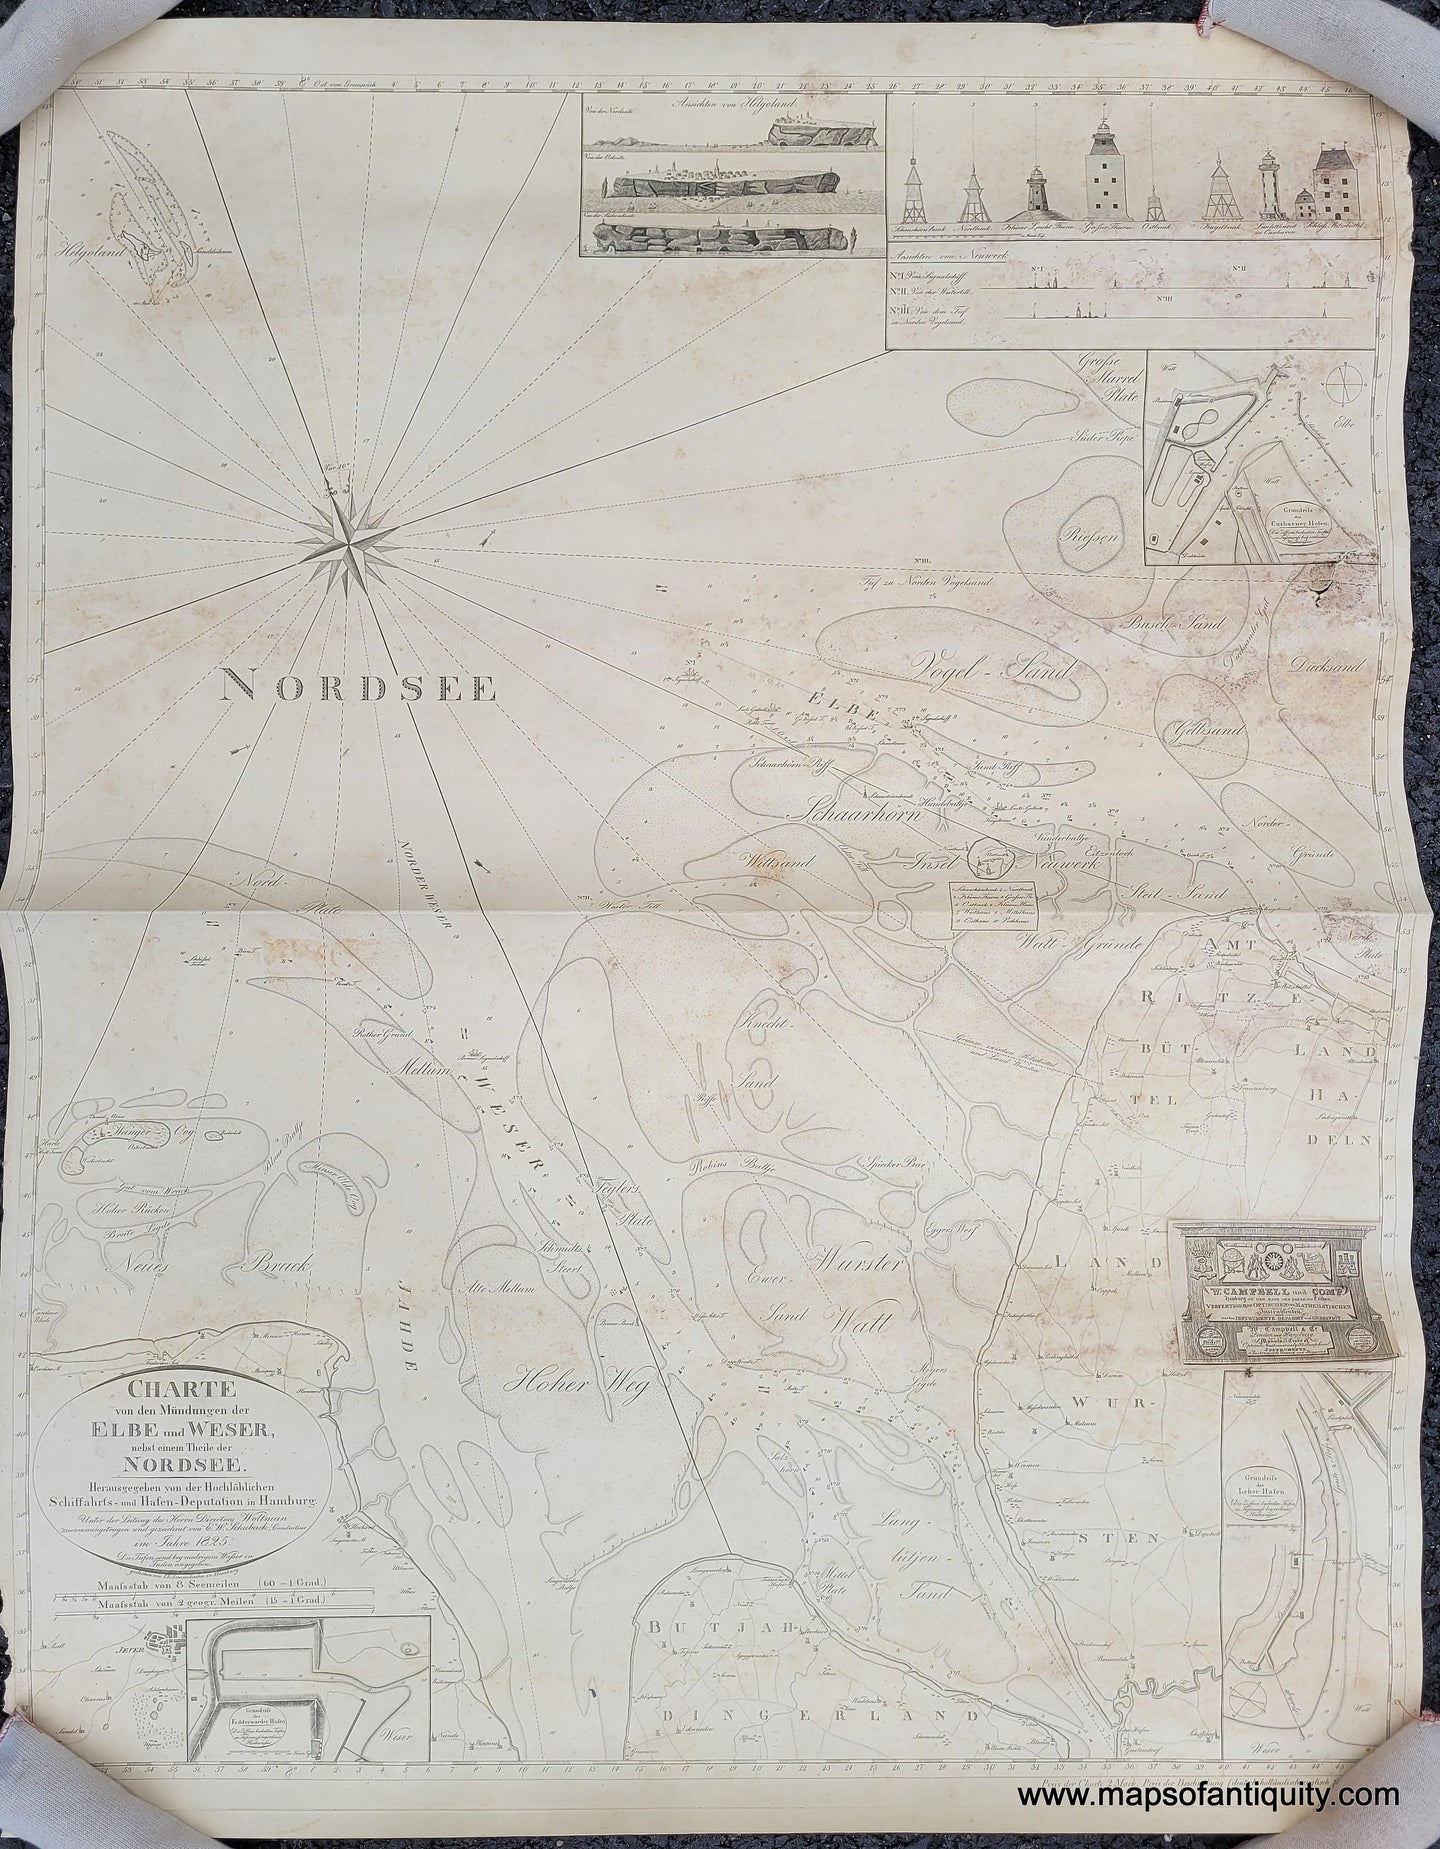 Genuine-Antique-Nautical-Chart-Chart-of-the-mouths-of-the-Elbe-and-Weser-Rivers-with-a-part-of-the-North-Sea---Charte-von-den-Mundungen-der-Elbe-und-Weser-nebst-einem-Theileder-Nordsee-1825-Schiffarts-and-Halfen-Deputation-Maps-Of-Antiquity